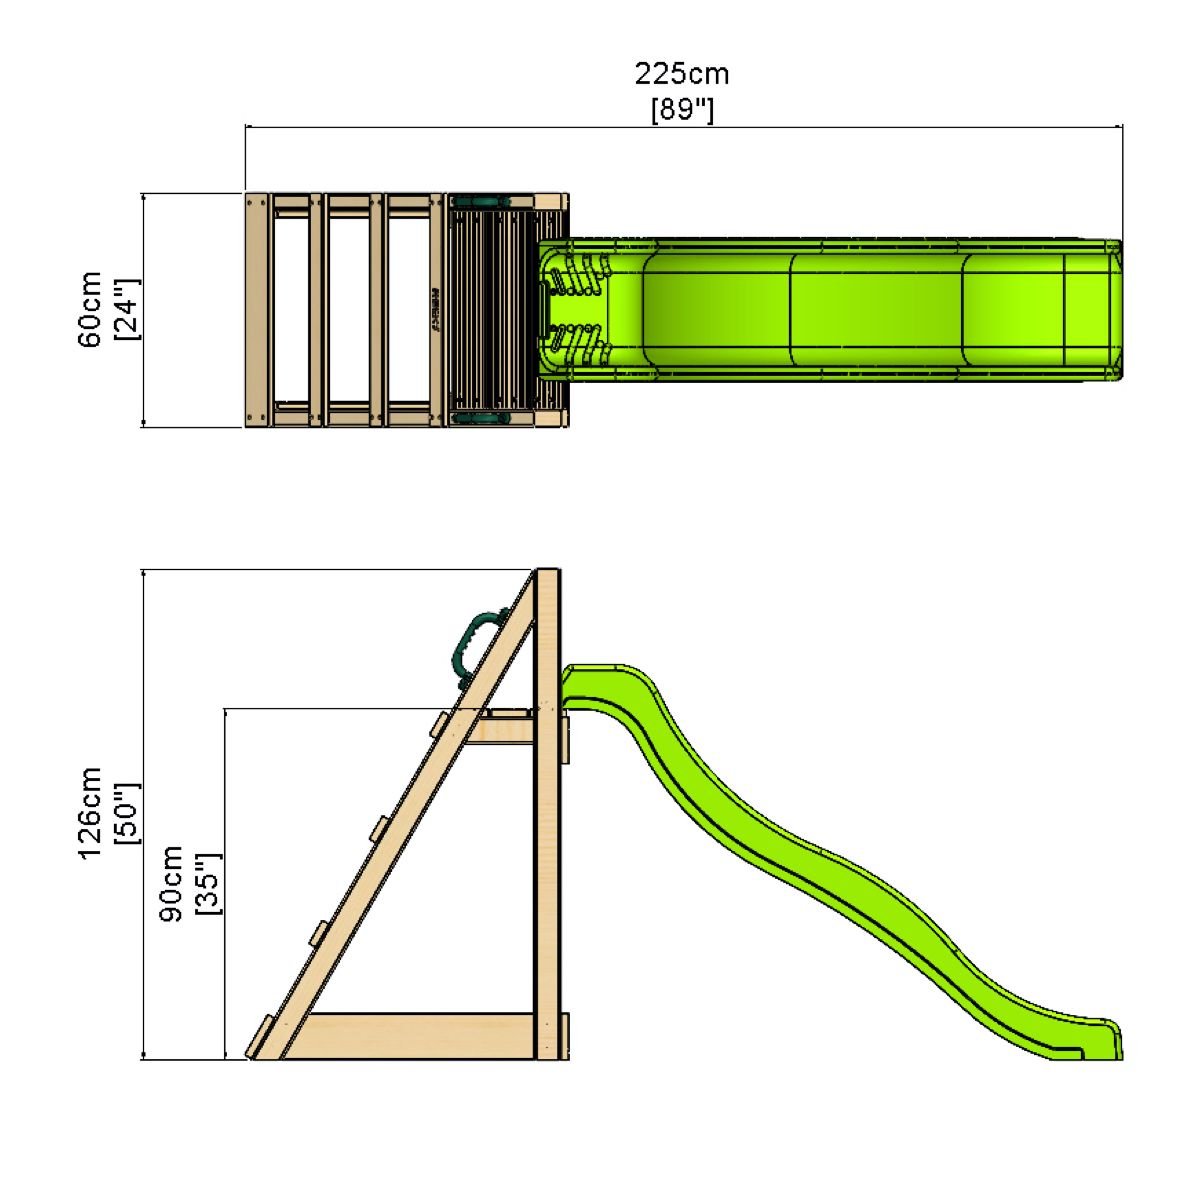 Rebo Free Standing Garden Wave Water Slide with Wooden Platform - 6Ft Slide Light Green